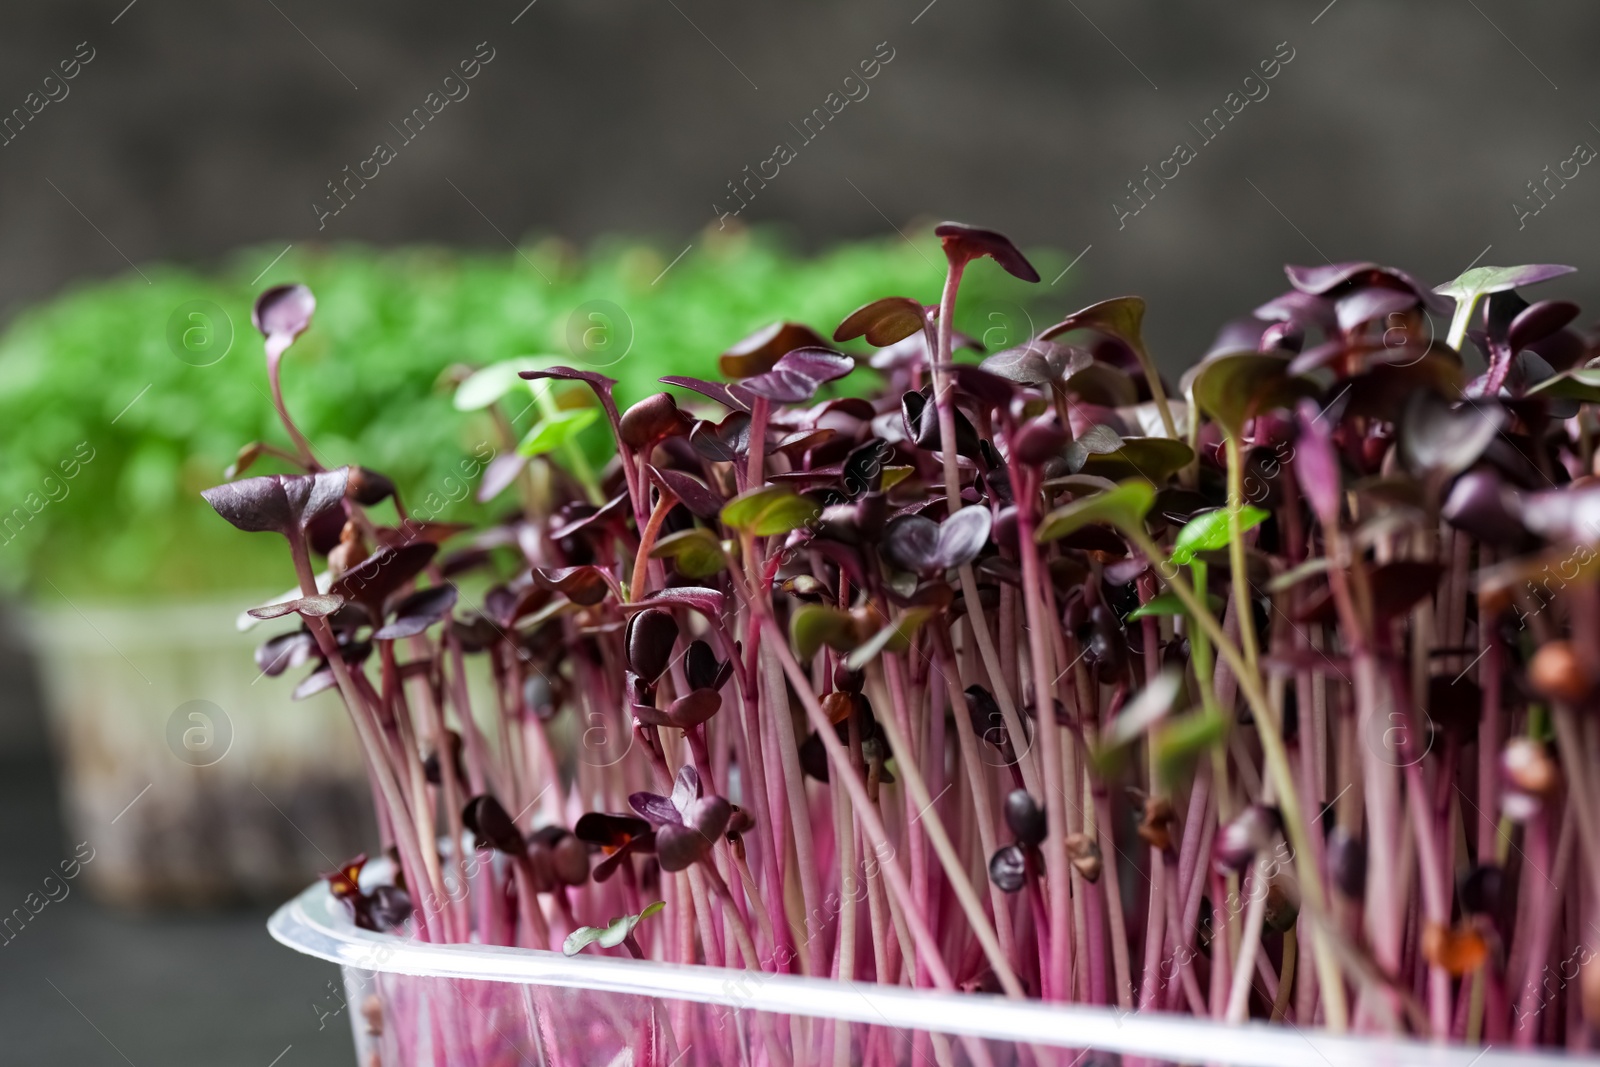 Photo of Fresh organic microgreen on grey background, closeup